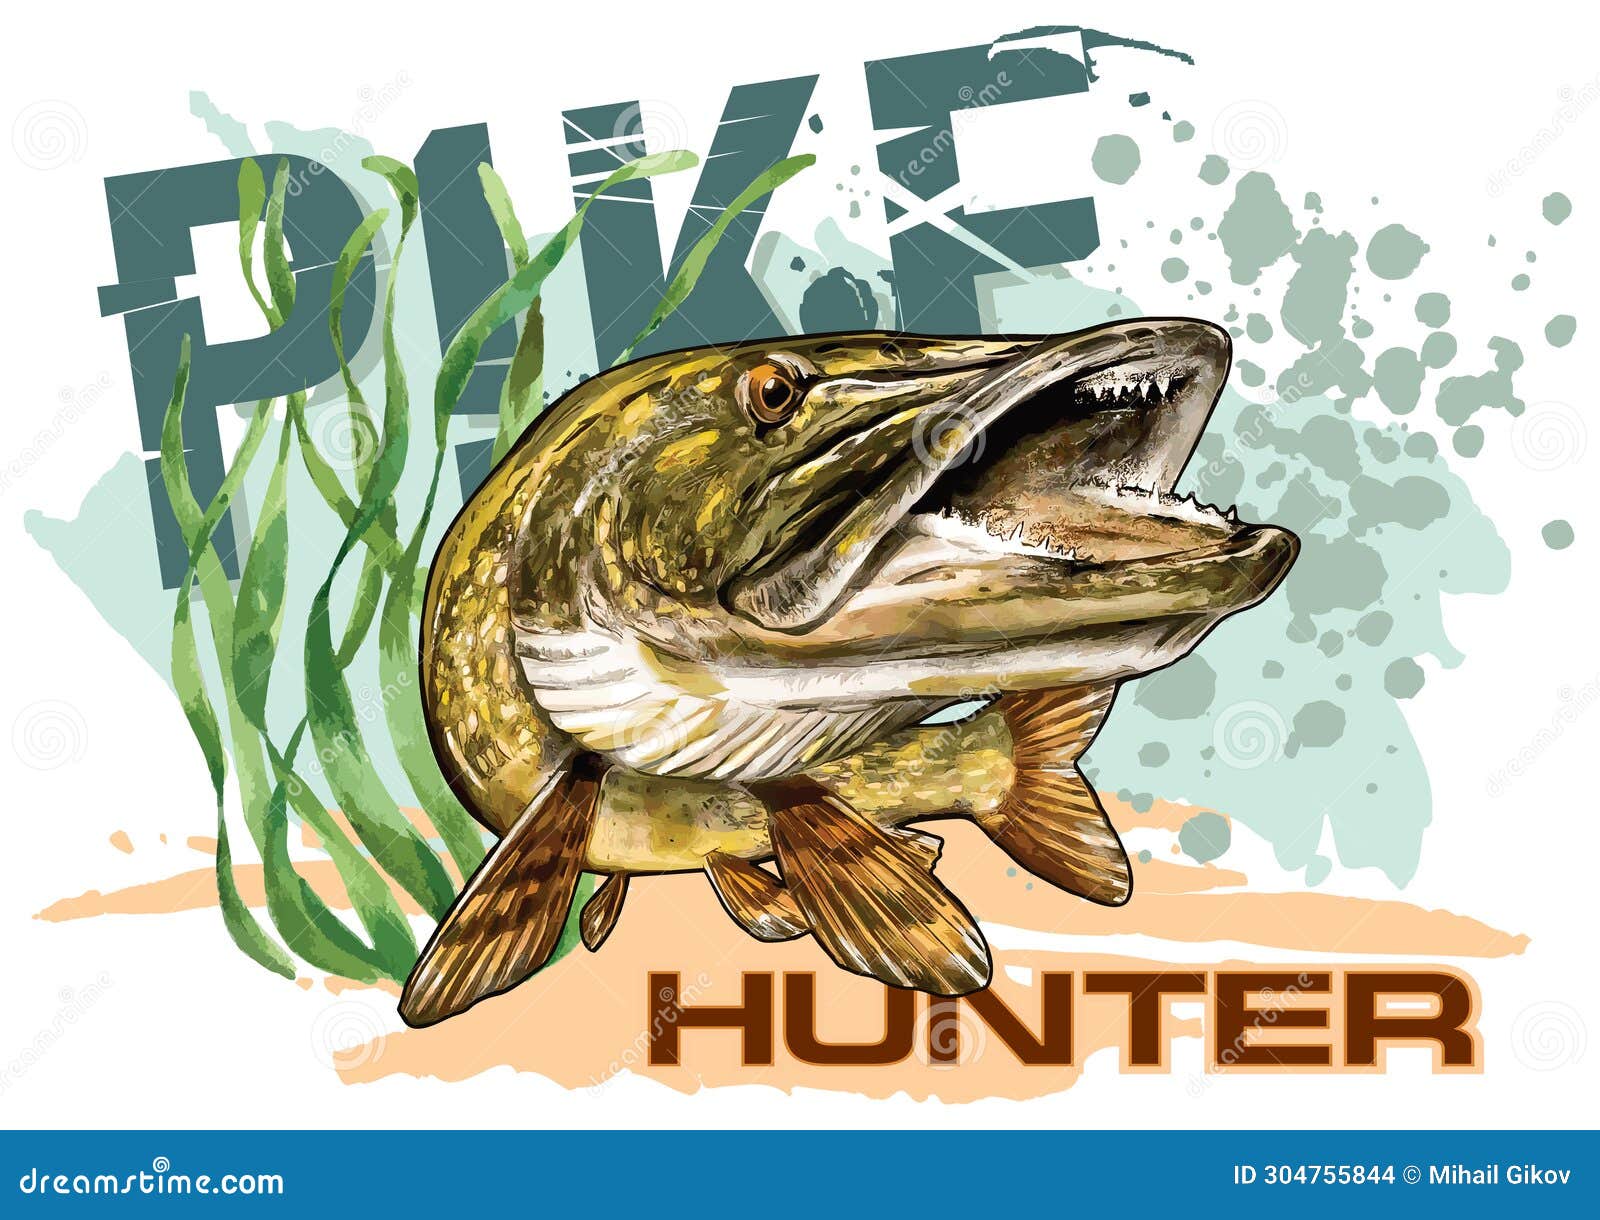 https://thumbs.dreamstime.com/z/vector-illustration-pike-fish-hunter-monster-printable-banner-shirt-fishing-gear-hat-more-cool-stuff-304755844.jpg